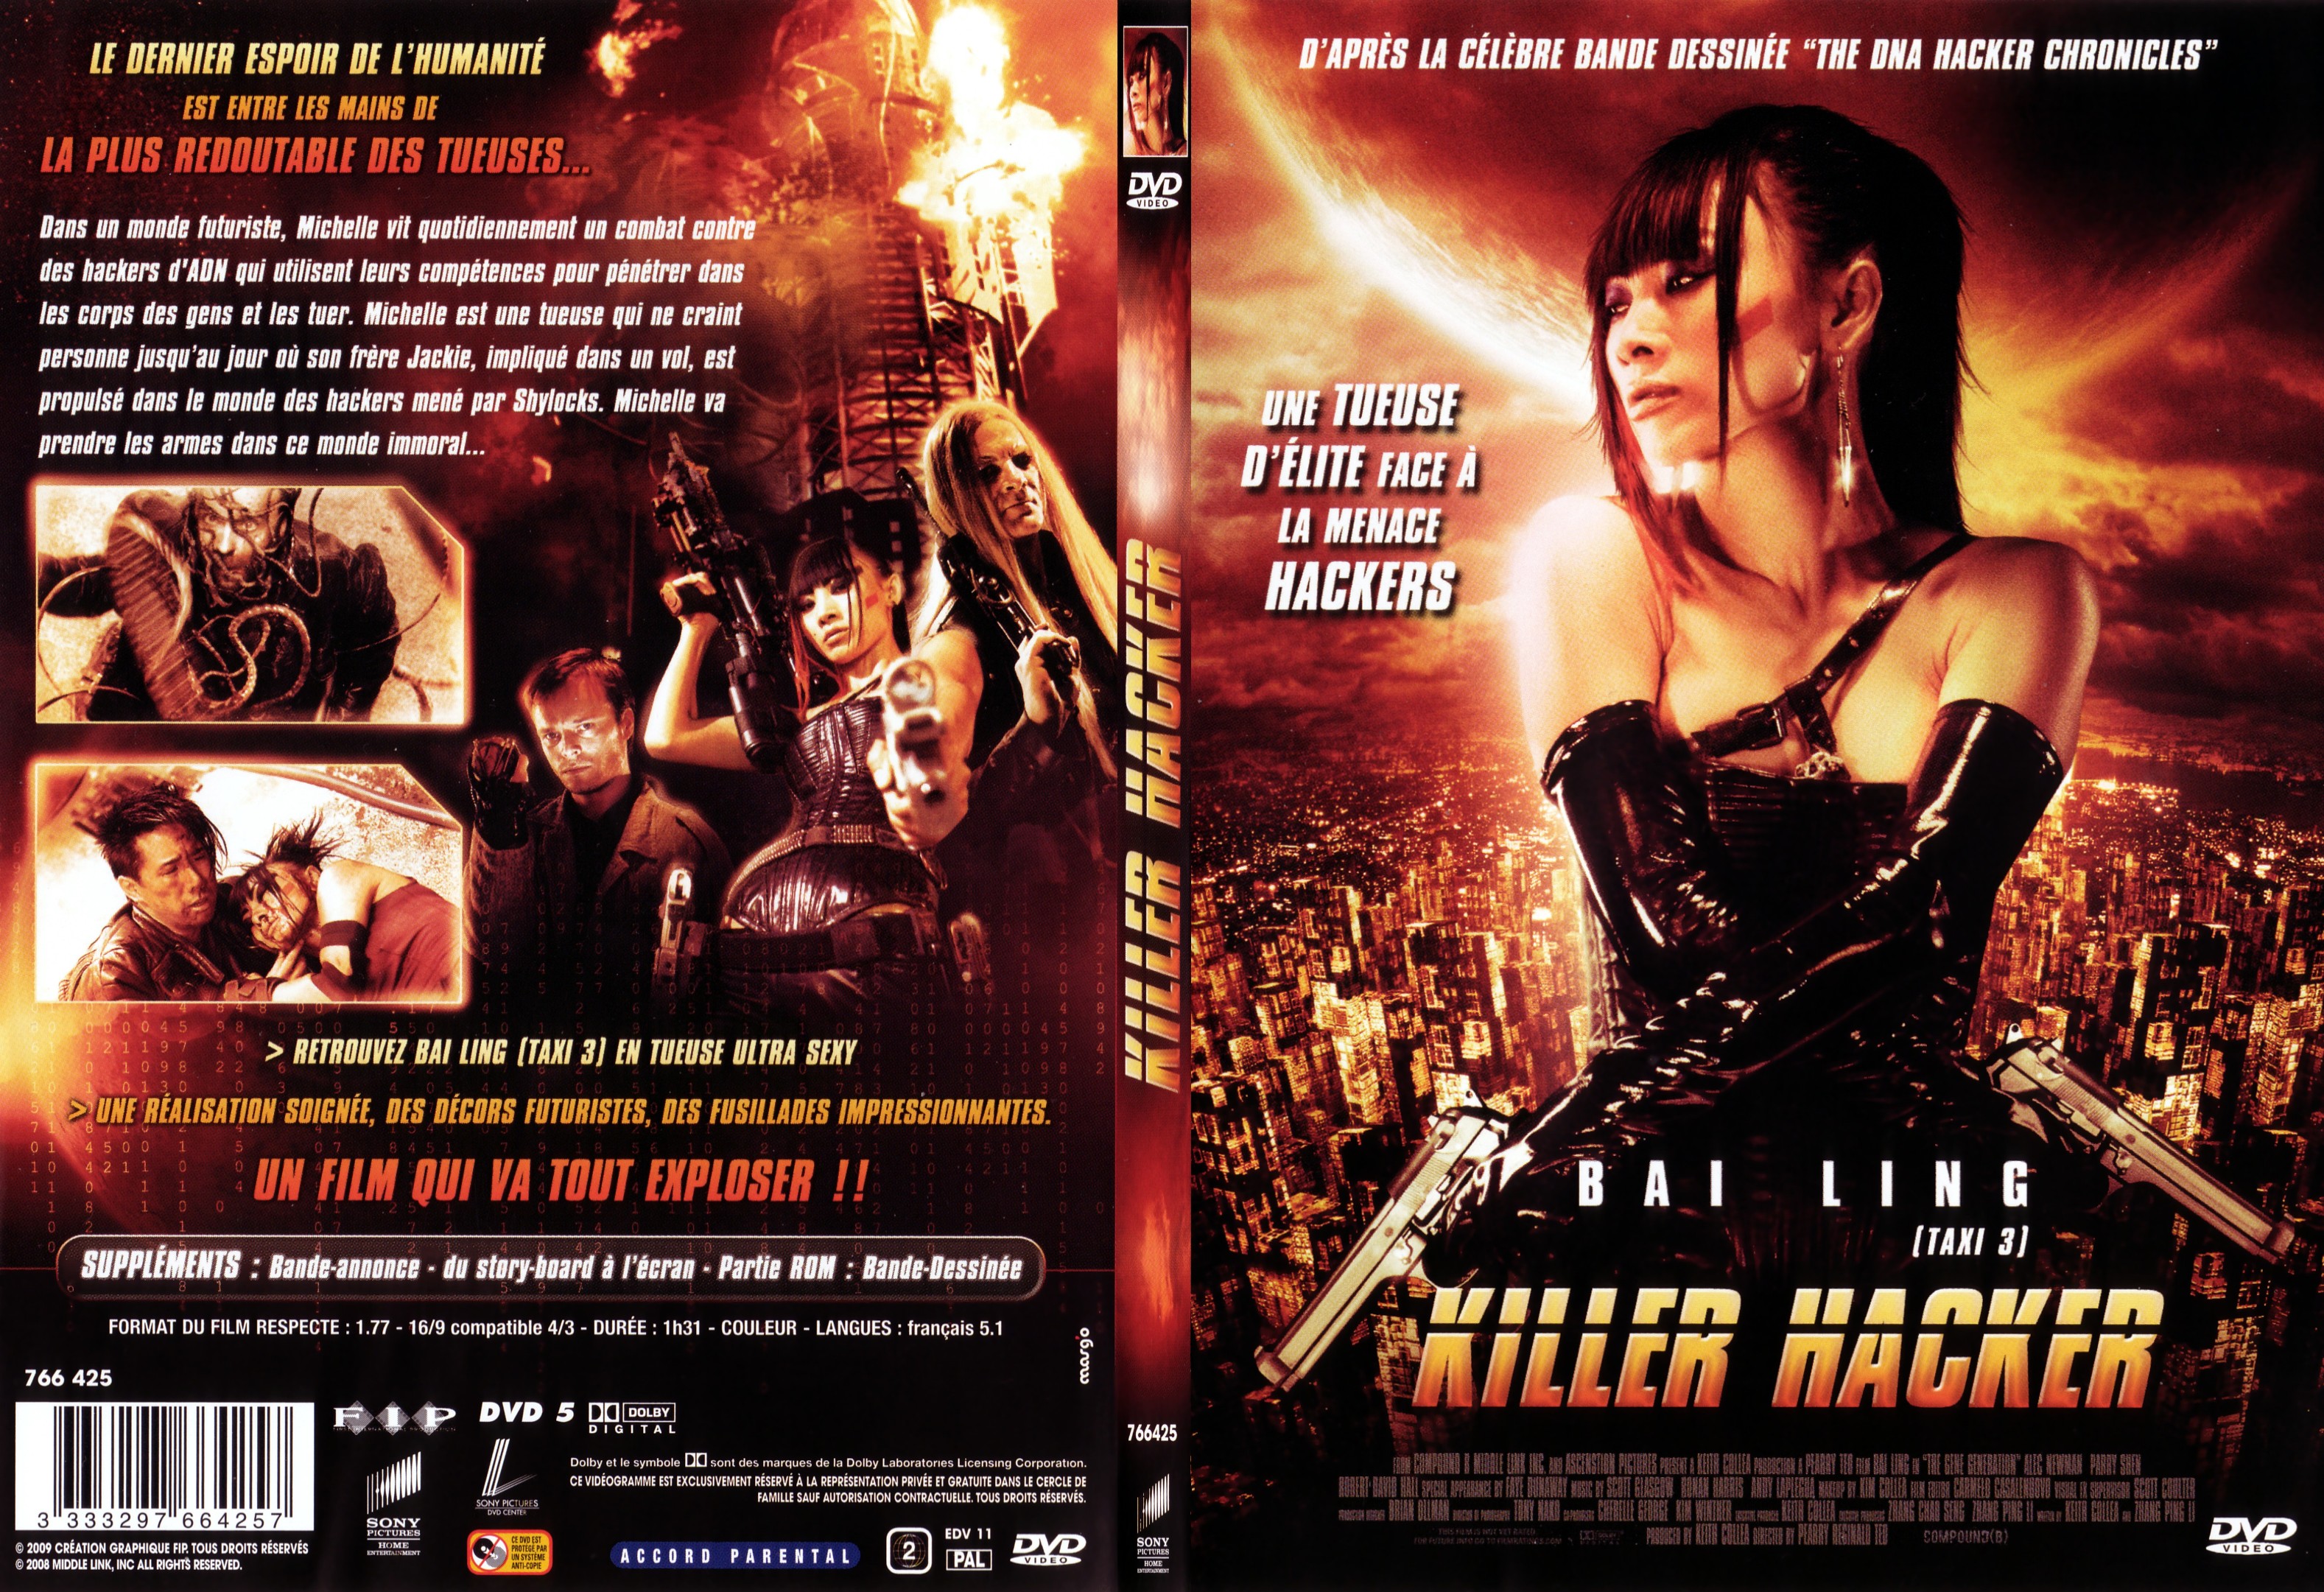 Jaquette DVD Killer hacker - SLIM